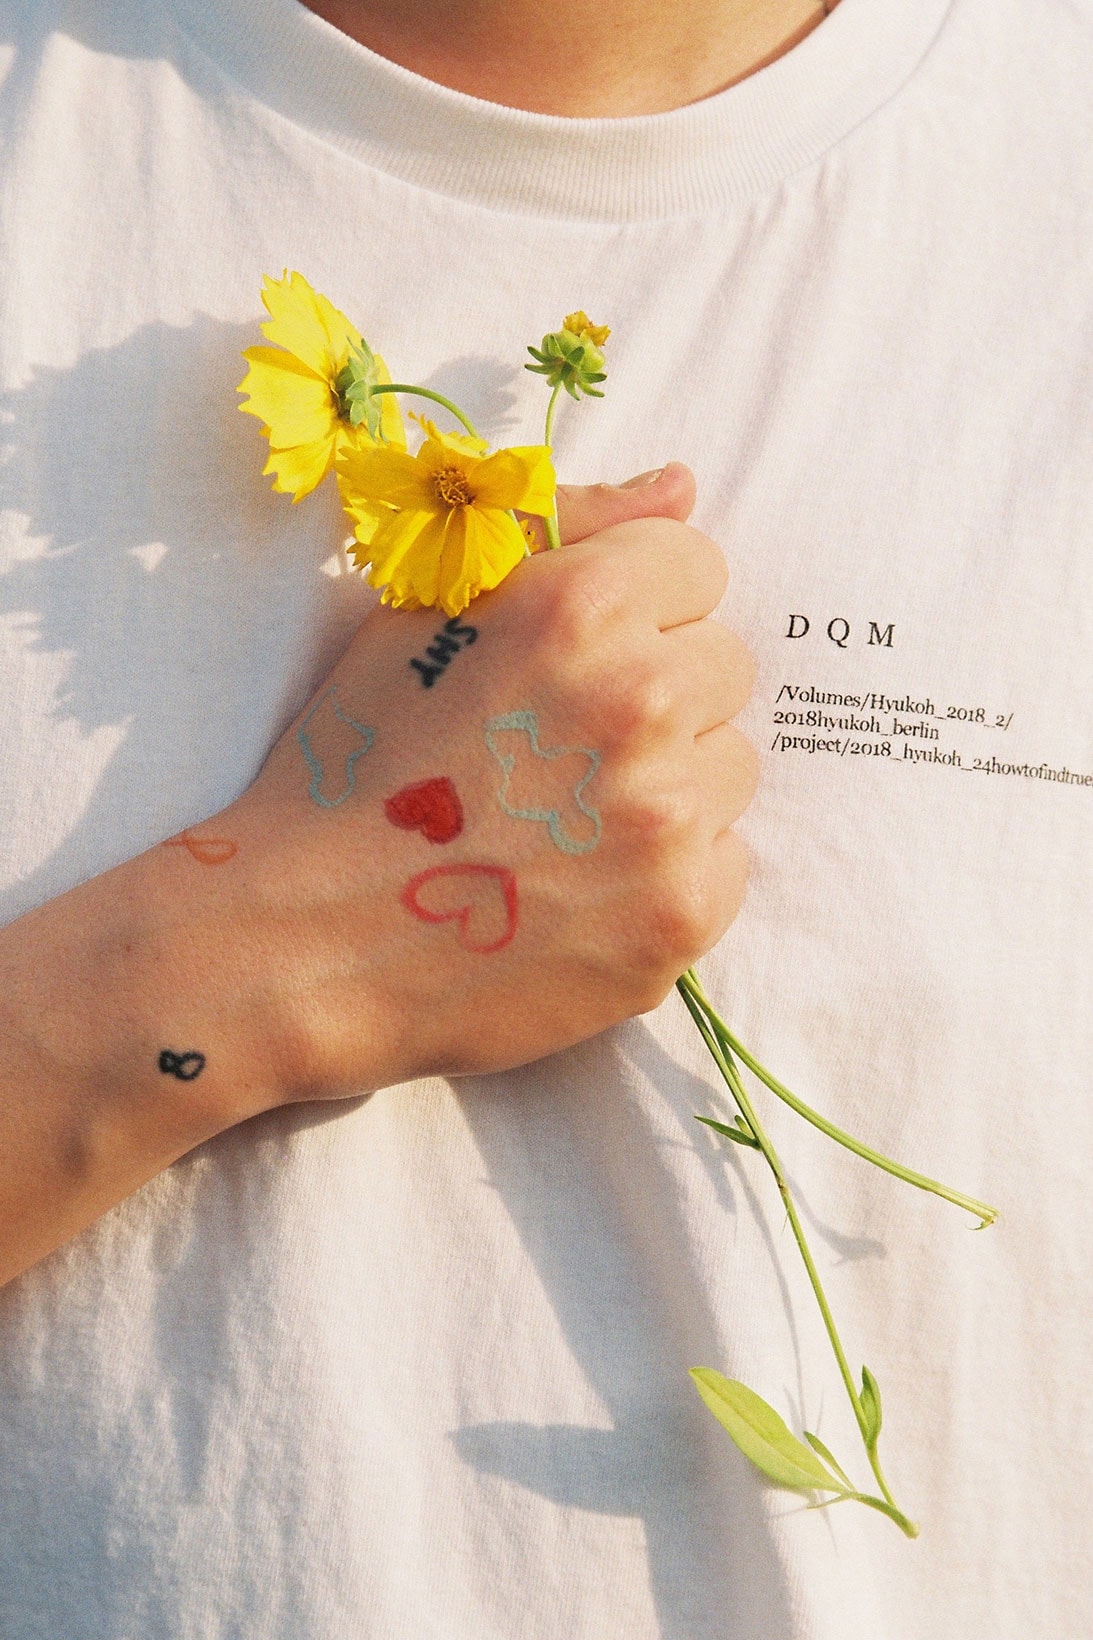 hyukoh uz eye opening liner summer campaign tattoos inclusivity men's beauty 